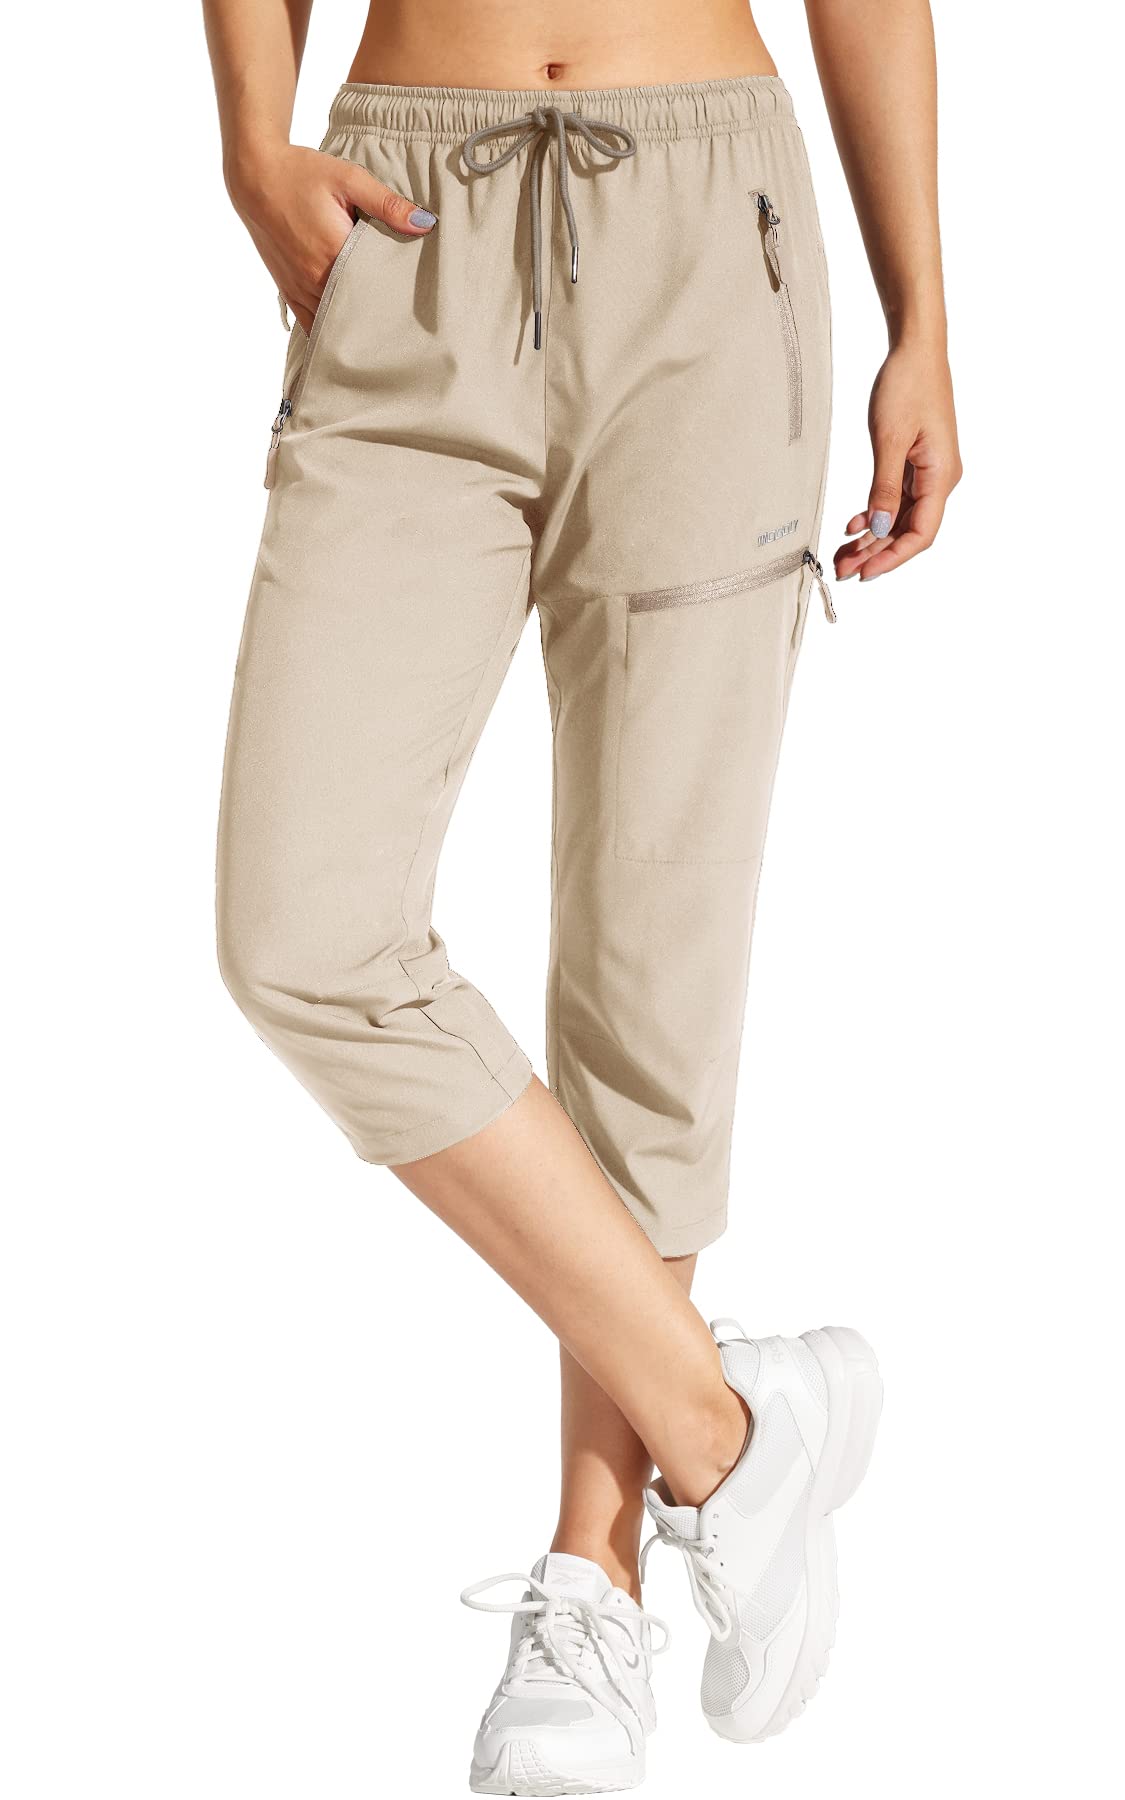 MOCOLY Women's Hiking Capris Pants Outdoor Lightweight Quick Dry Water  Resistant UPF 50 Cargo Pants with Zipper Pockets Khaik XL